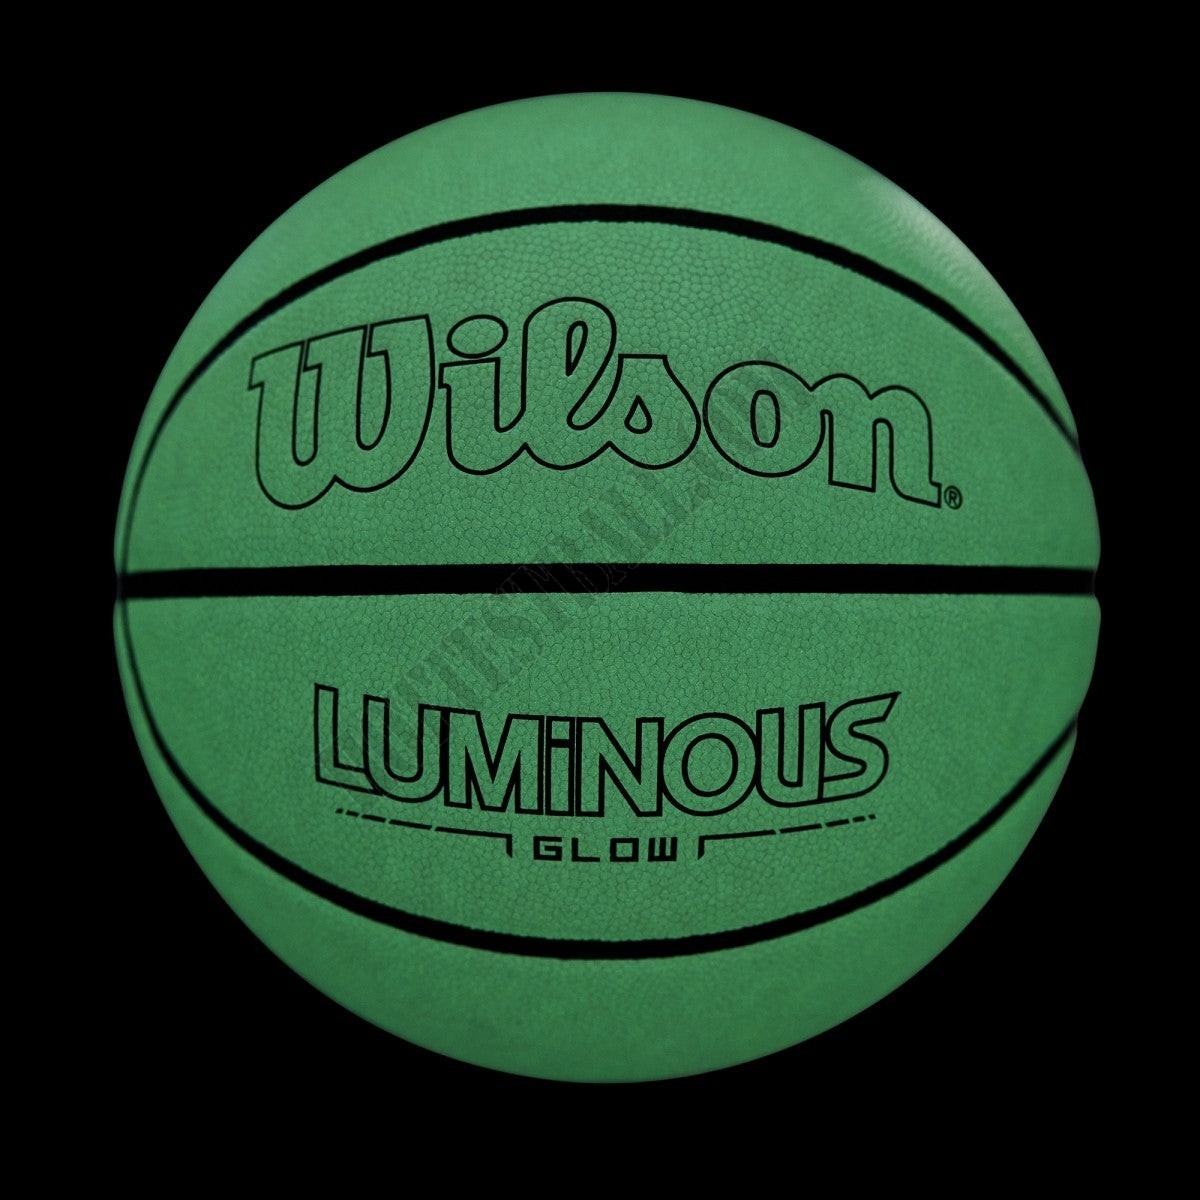 Luminous Glow Basketball - Wilson Discount Store - -2